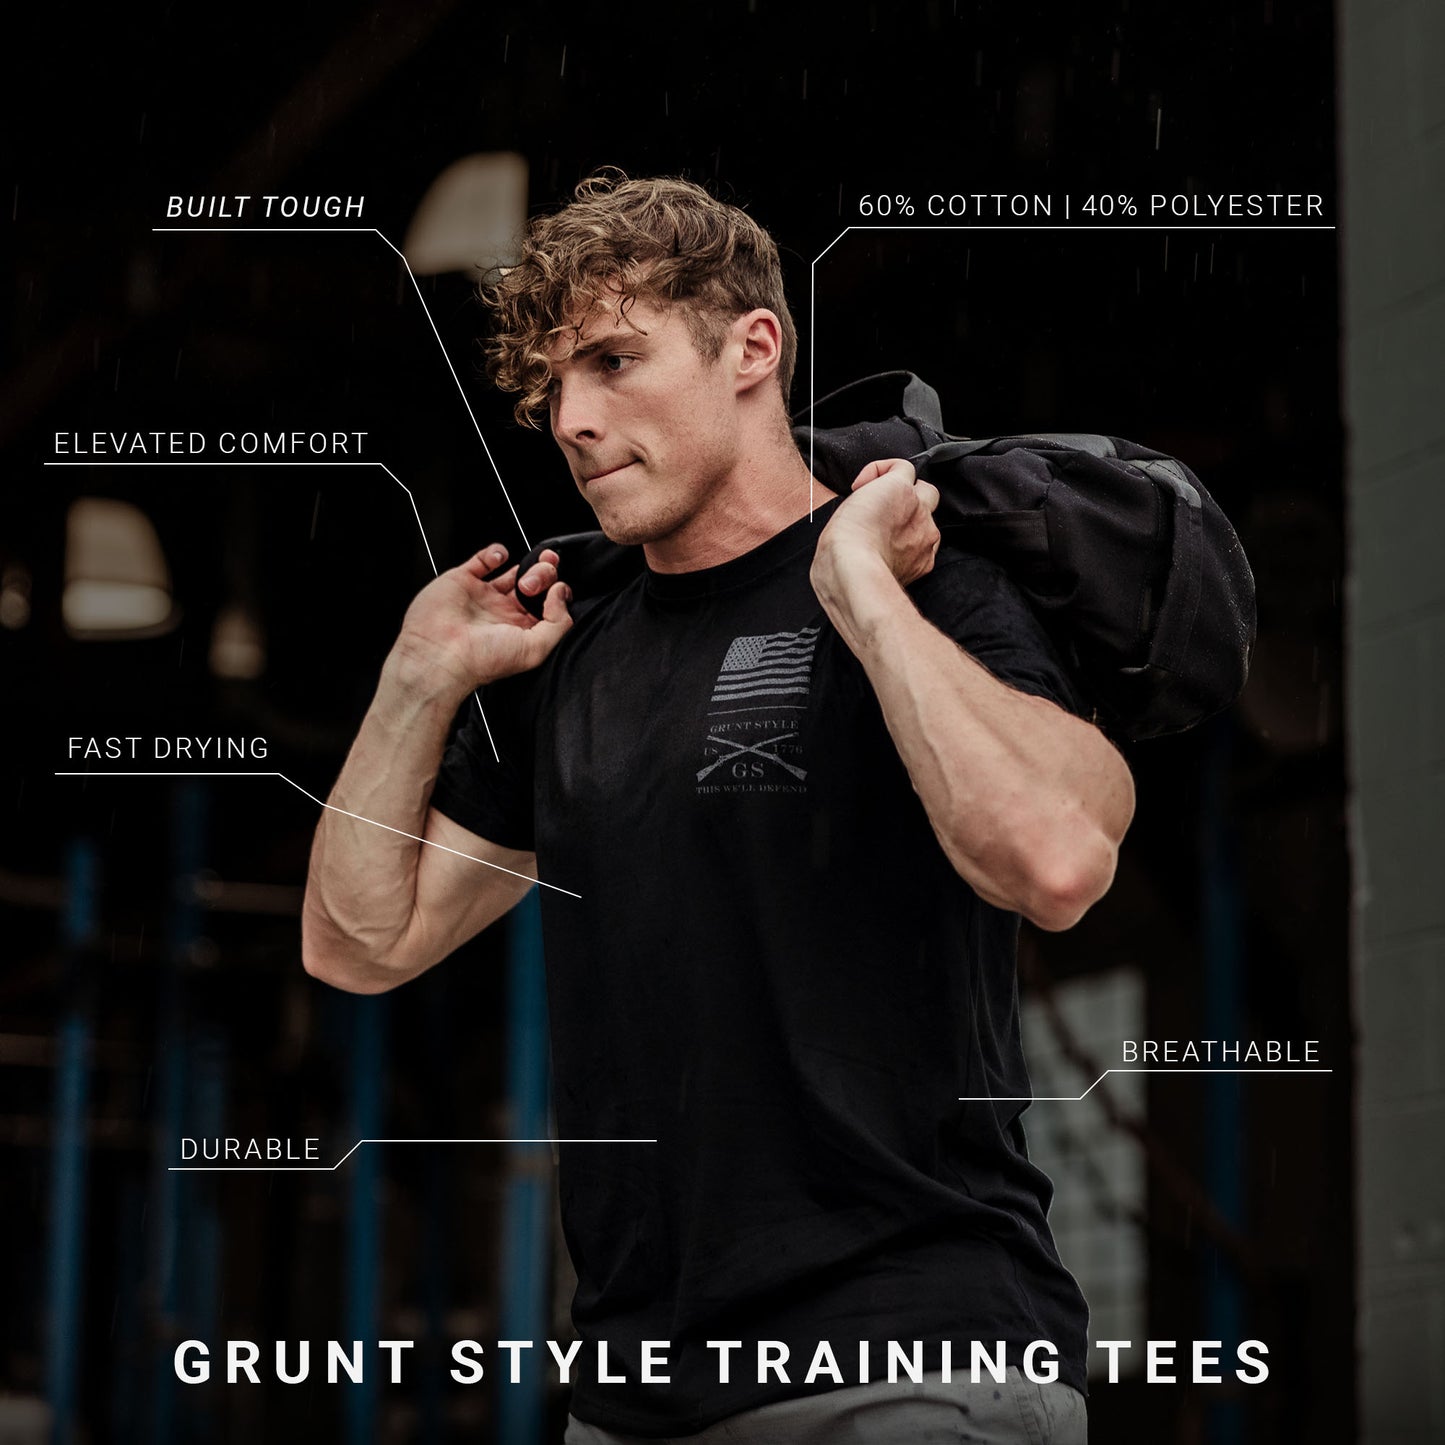 Strength Through Suffering Shirt Info | Grunt Style